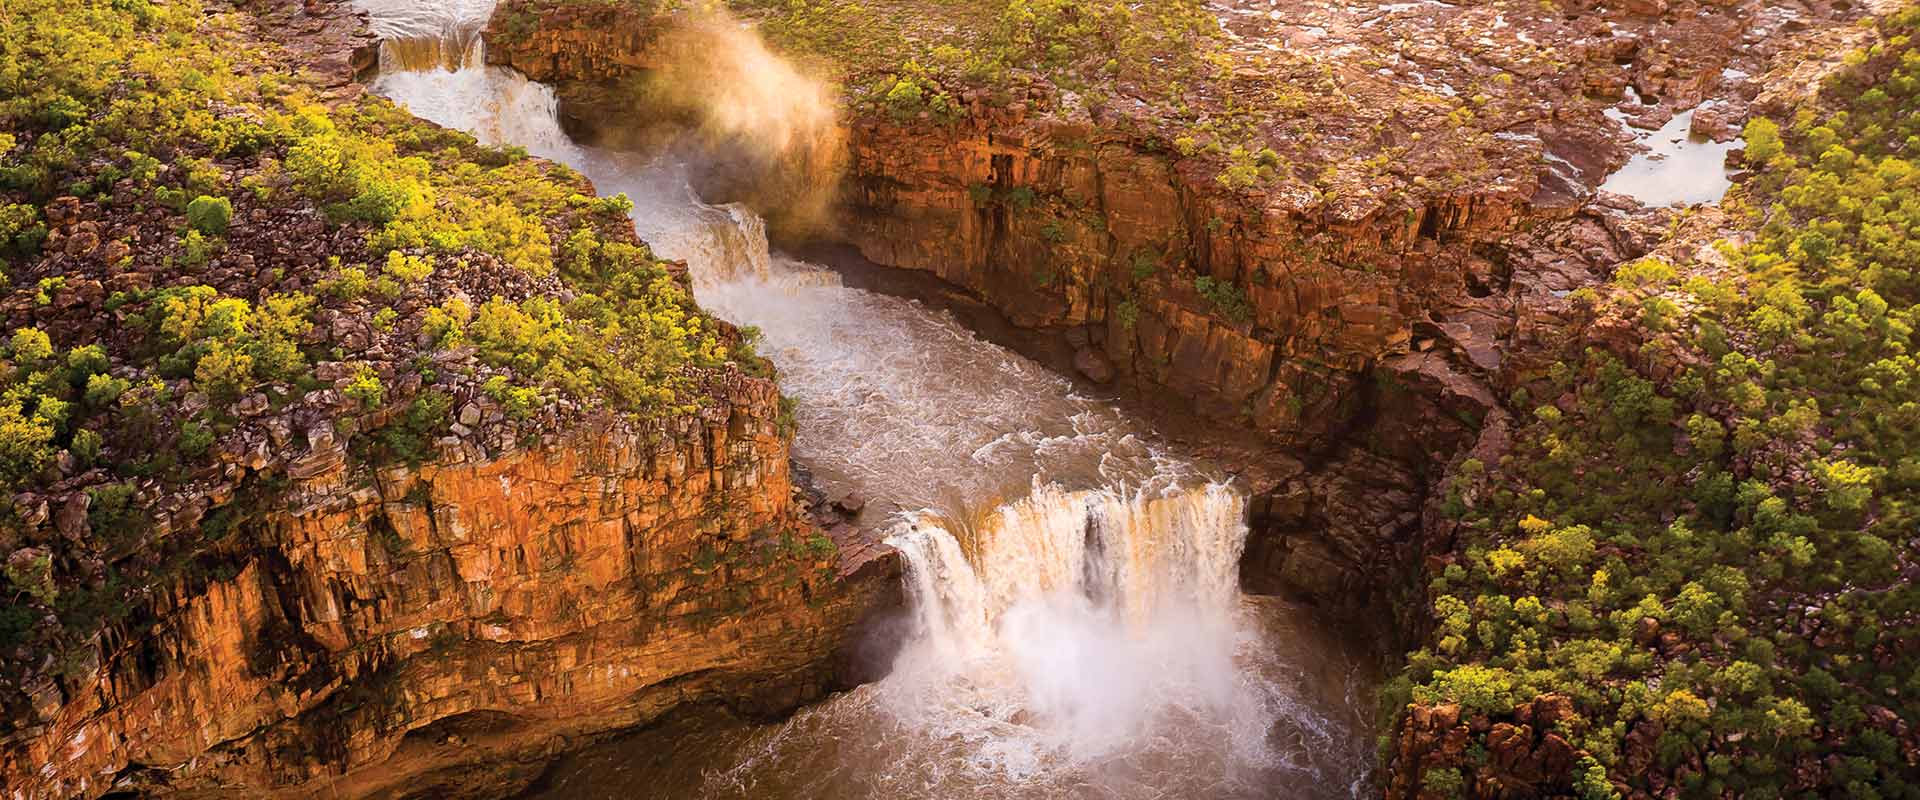 mitchell falls wet season gary annett kimberley, australia